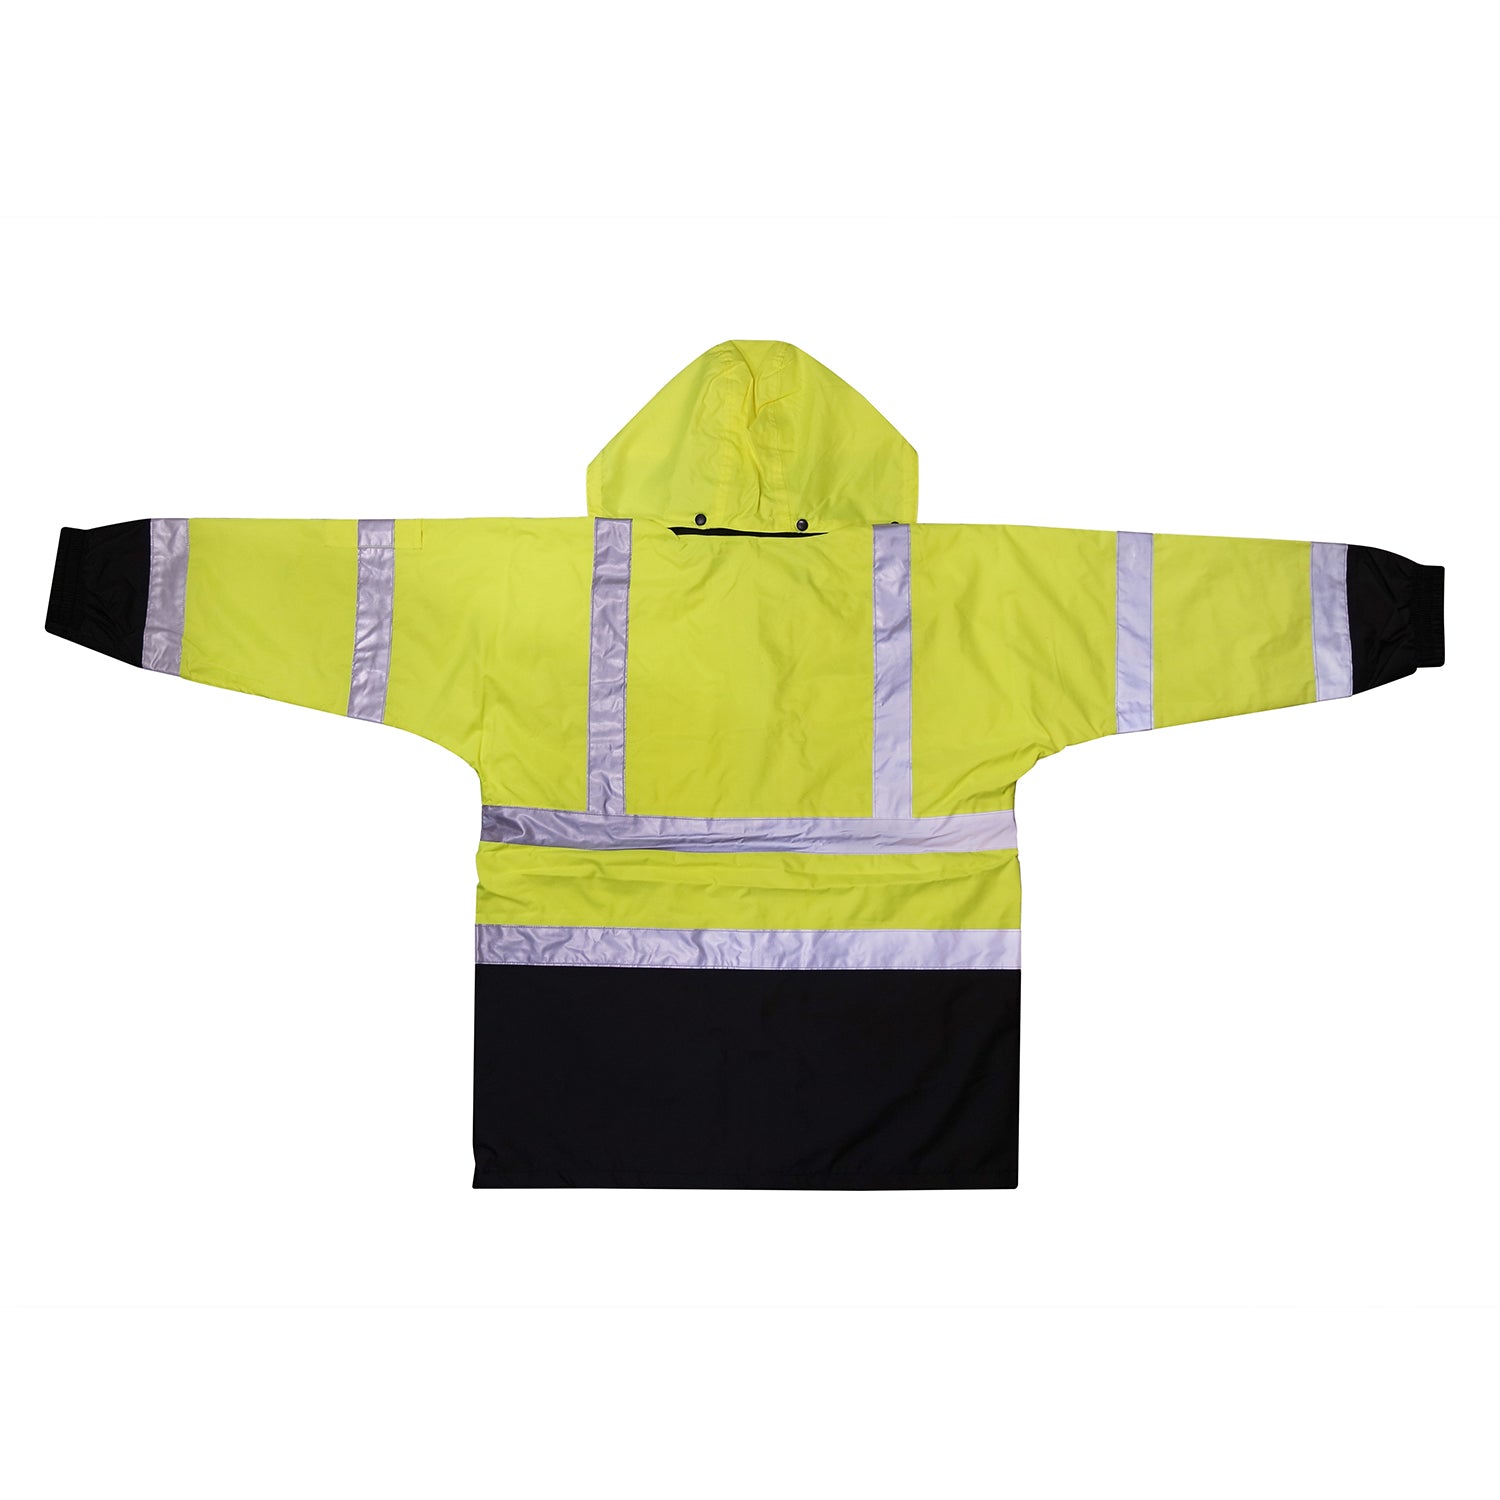 Omni Rainwear Safety Jacket - Neon Yellow -Safety- eGPS Solutions Inc.